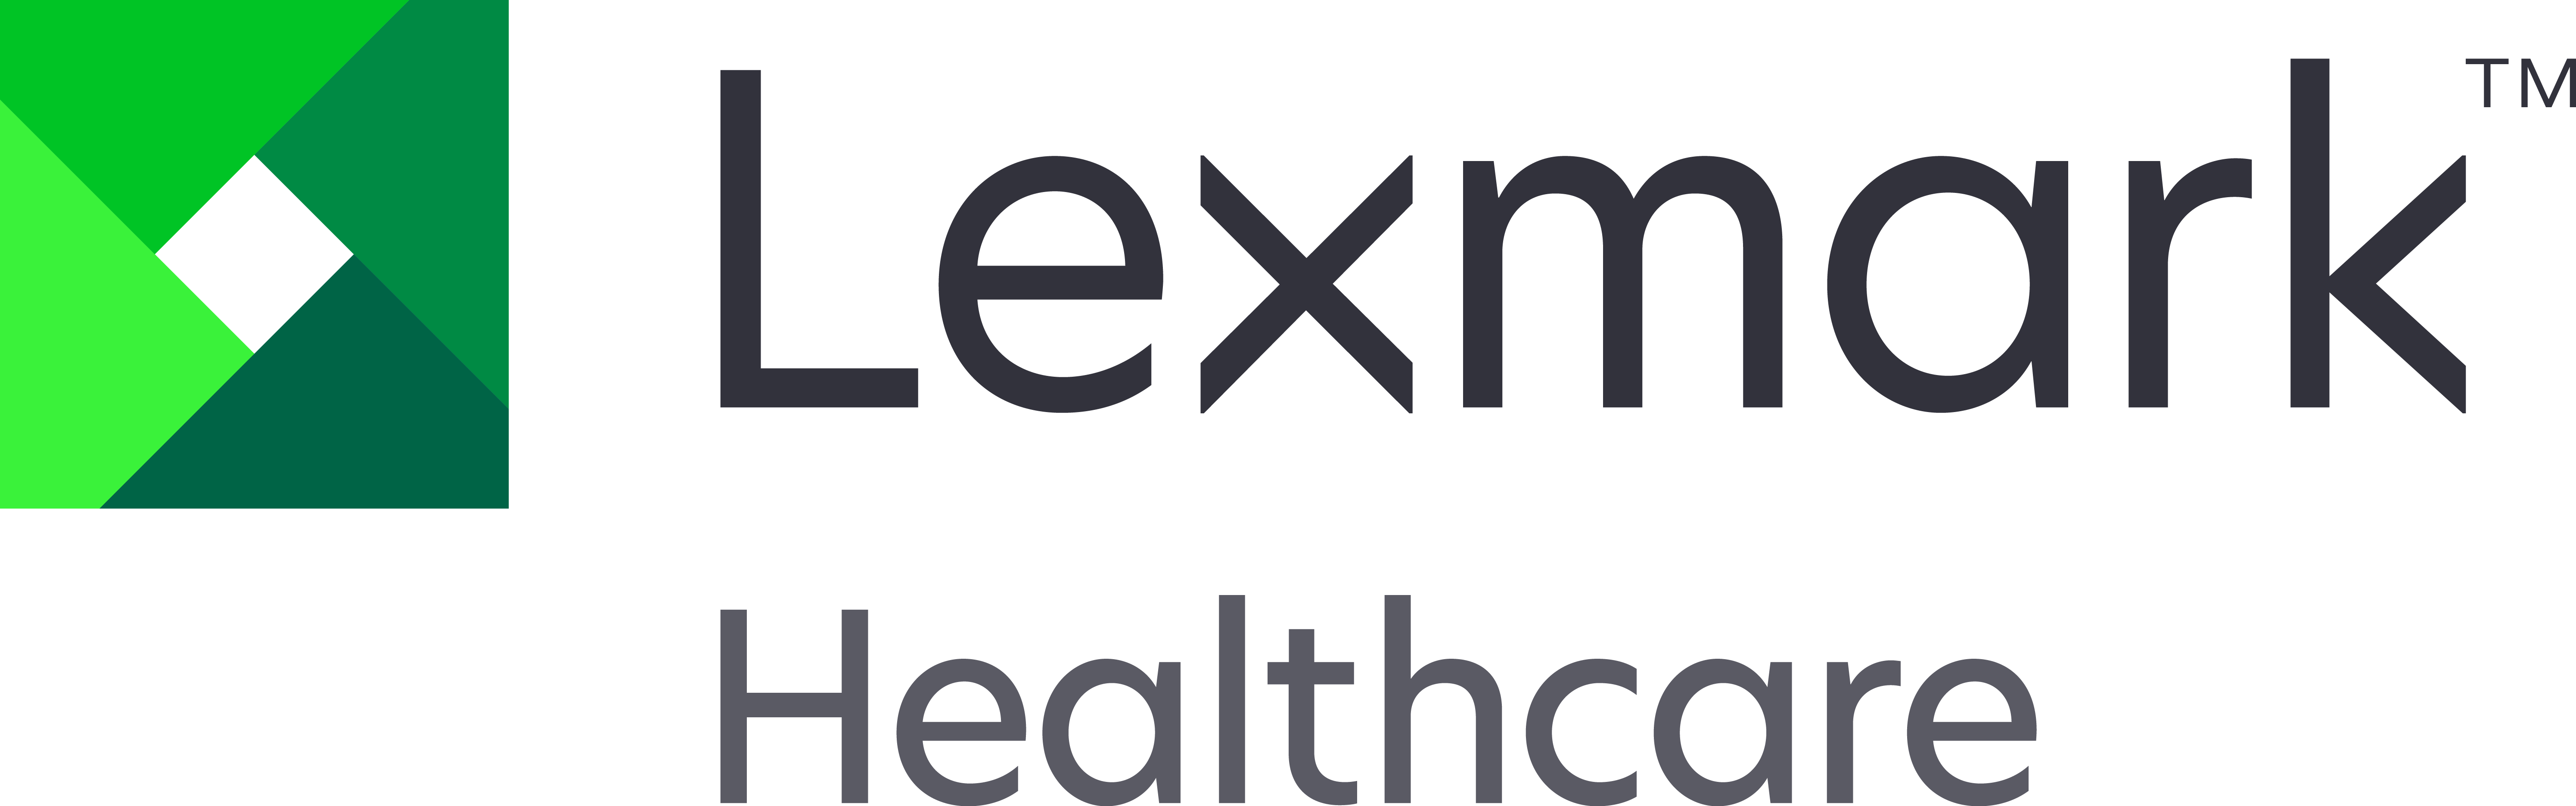 Lexmark Healthcare logo